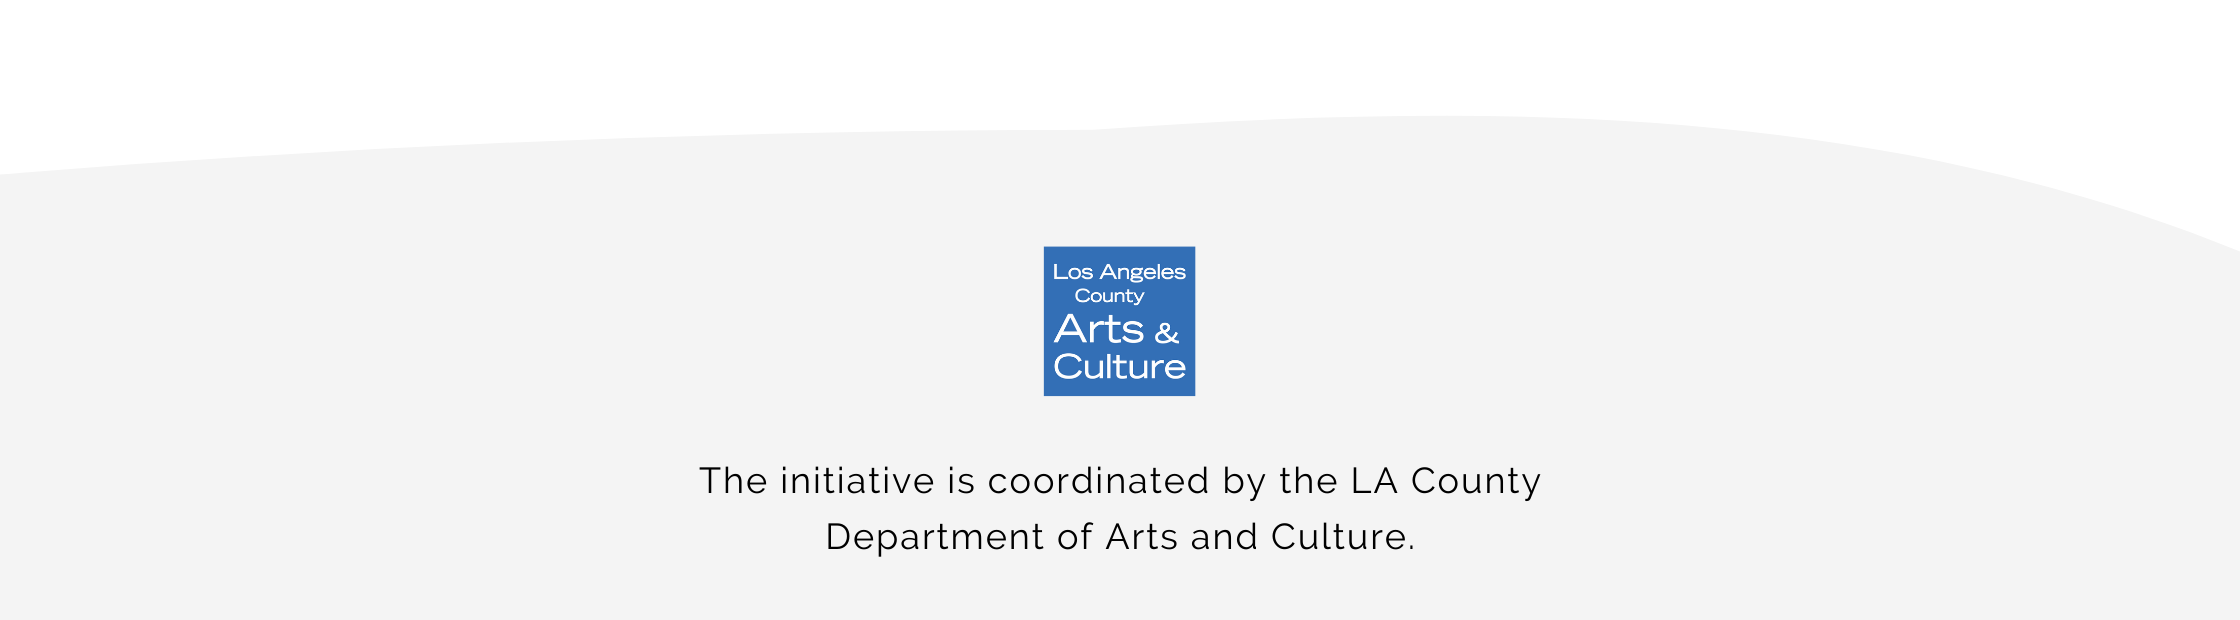 LA County Arts Ed Collective